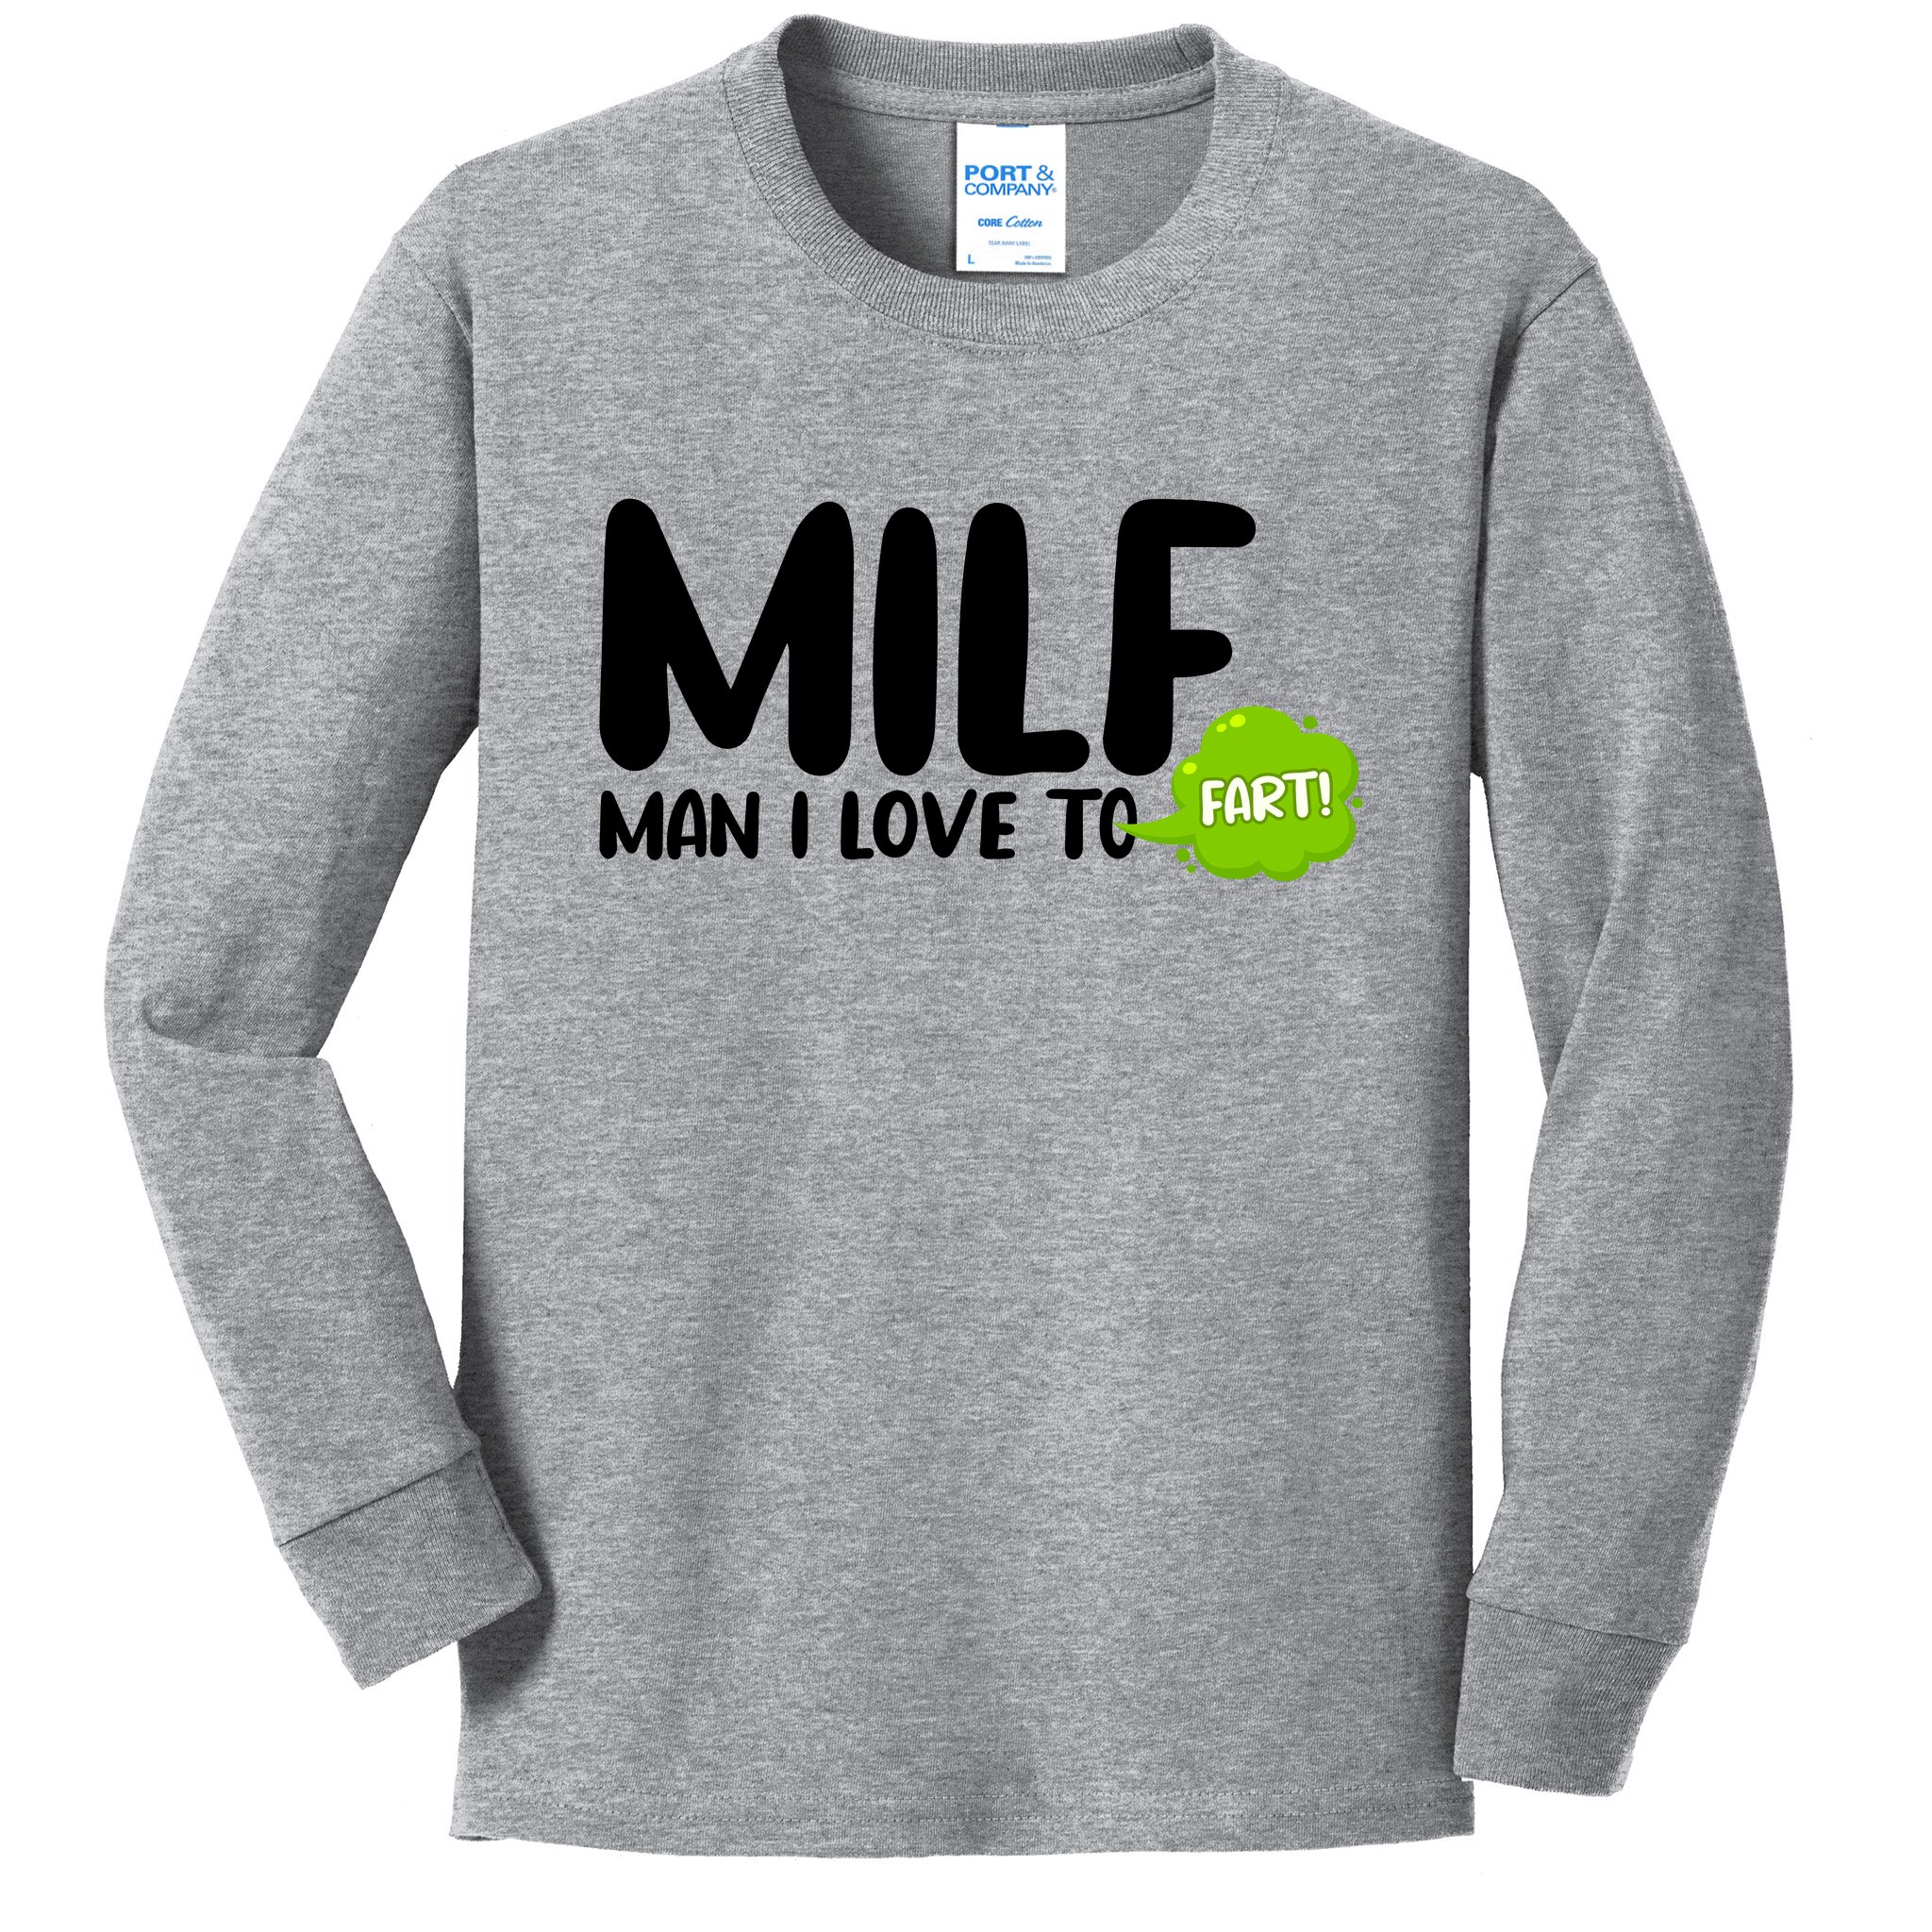 Milf Man I Love Fishing T-Shirt by Jacob Zelazny - Pixels